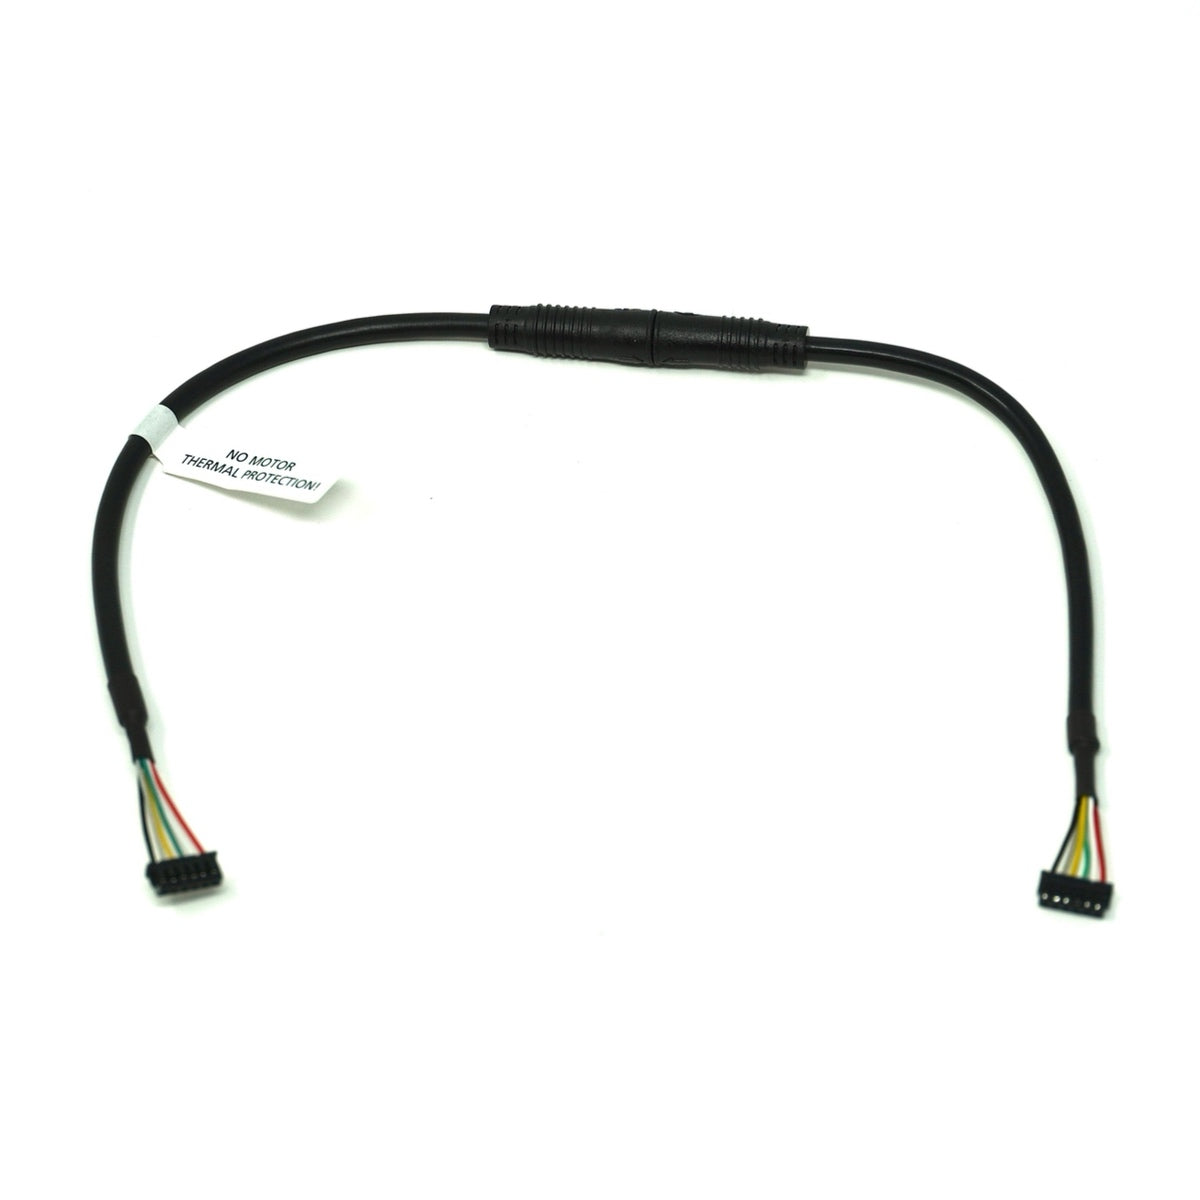 Sensor Adapter Cable